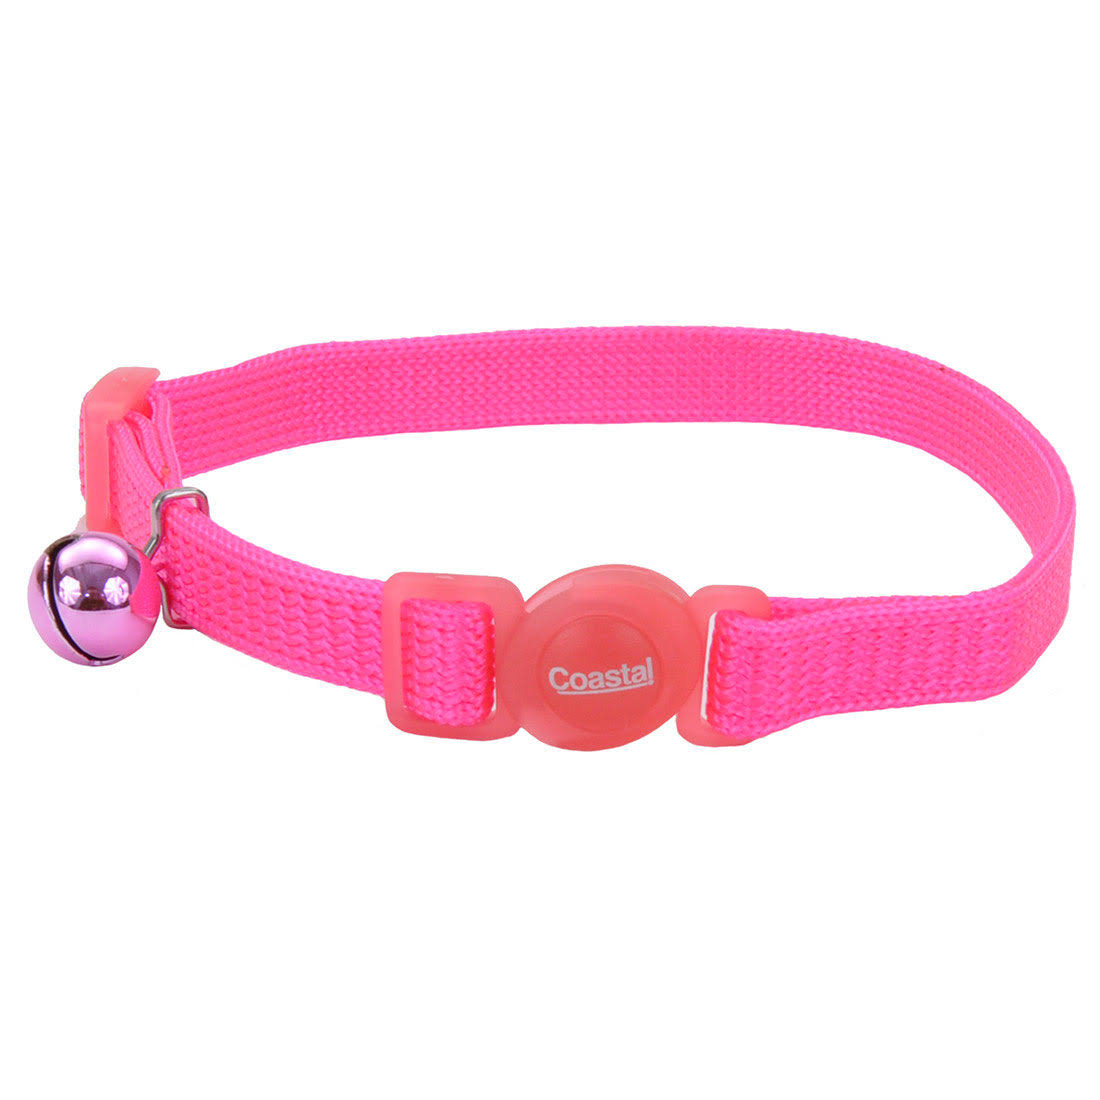 Coastal Pet Products Safe Cat Adjustable Breakaway Collar - Neon Pink